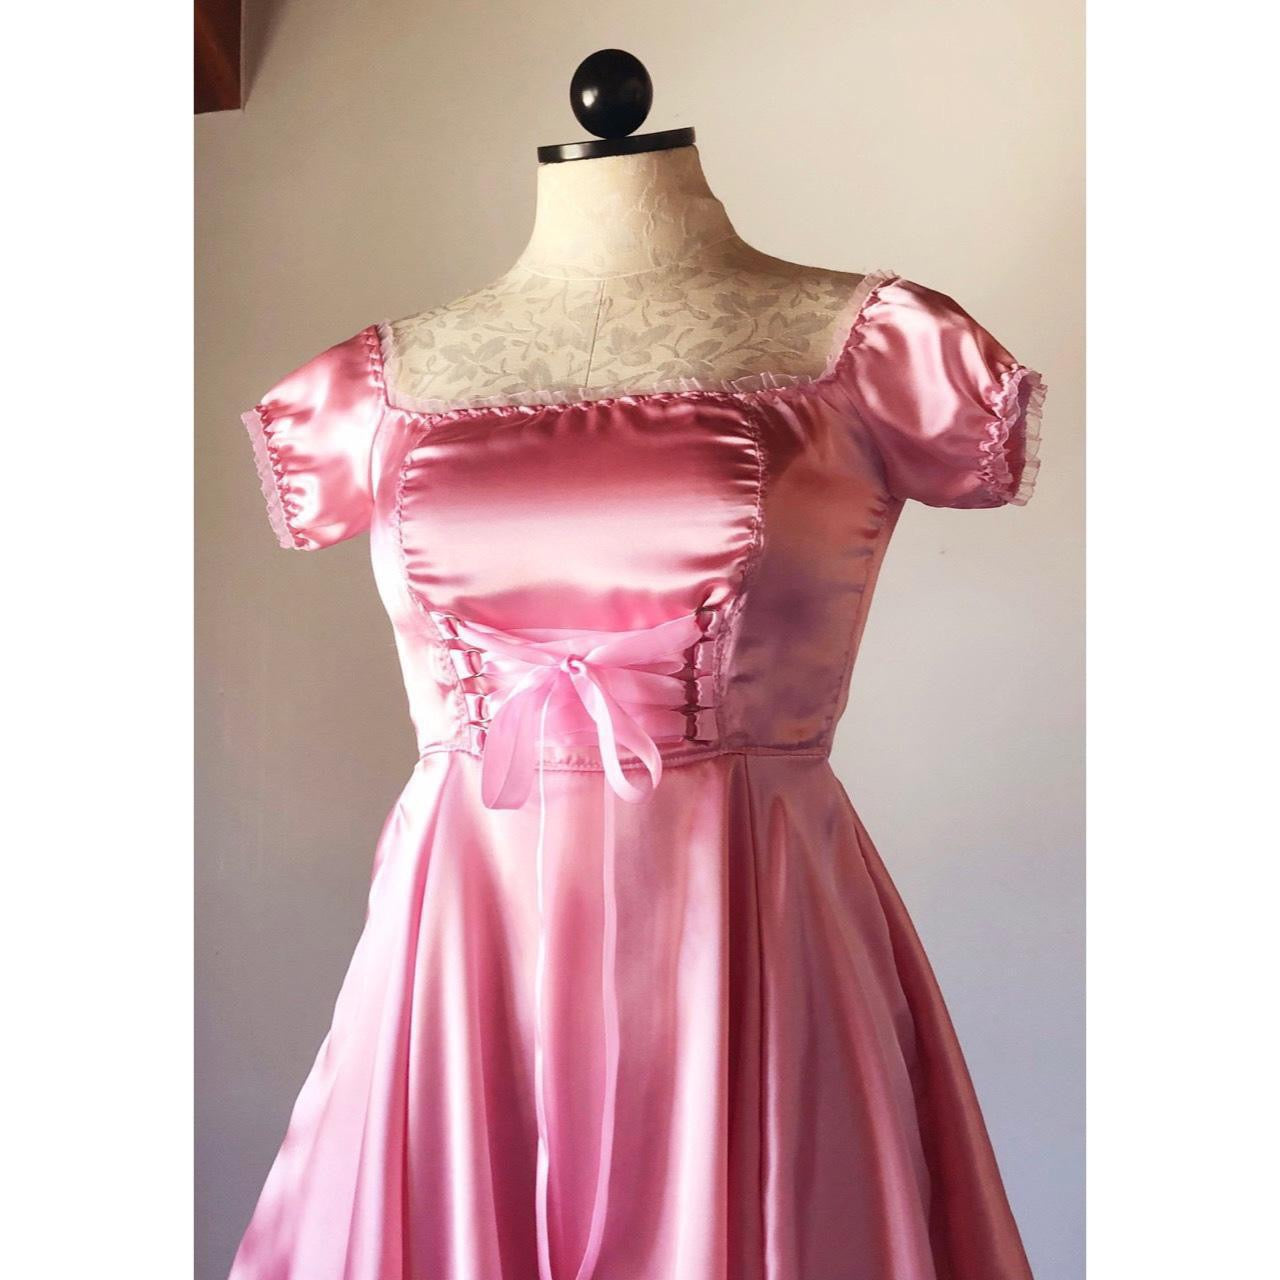 The Satin Tori Barmaid Dress in Pink